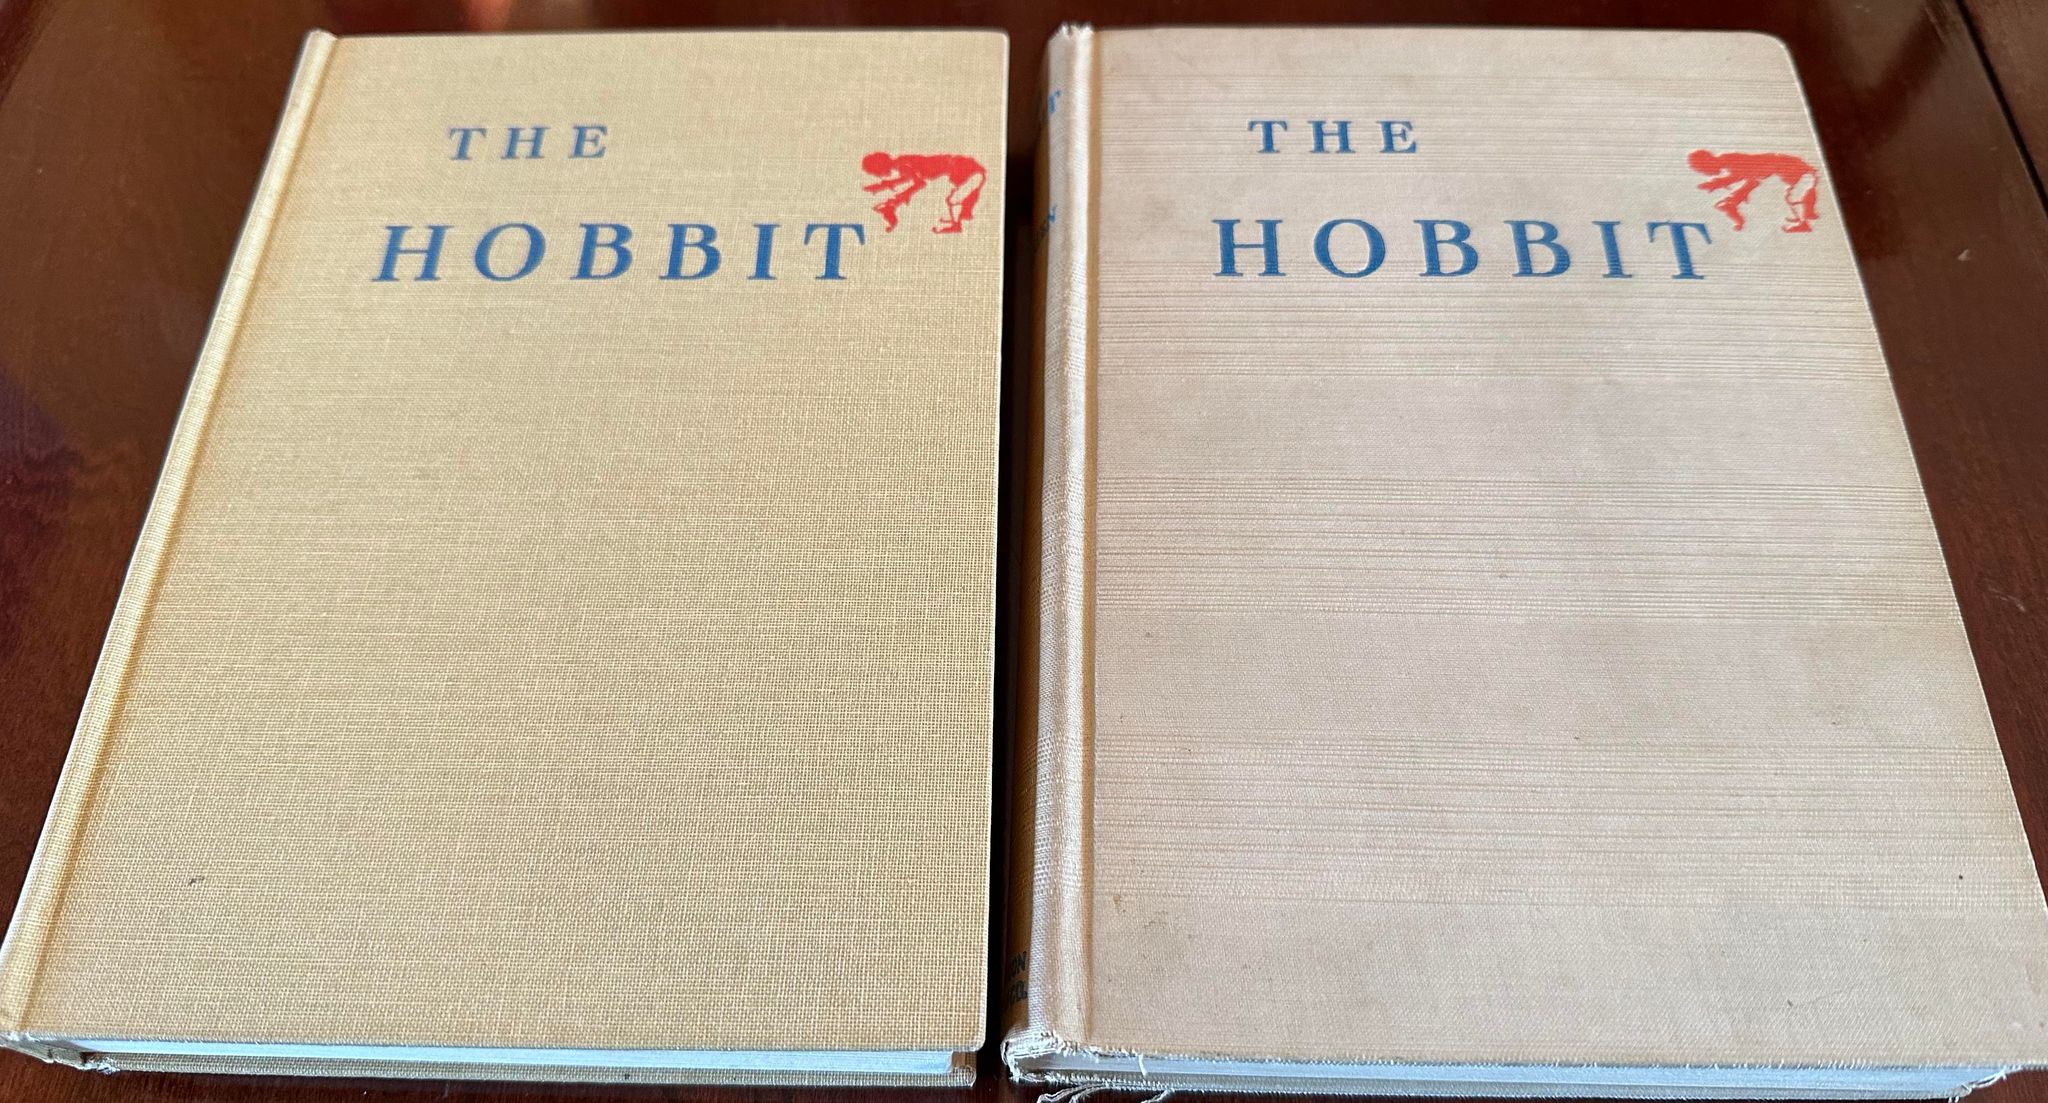 Hobbit 1st state 2 variants.jpeg